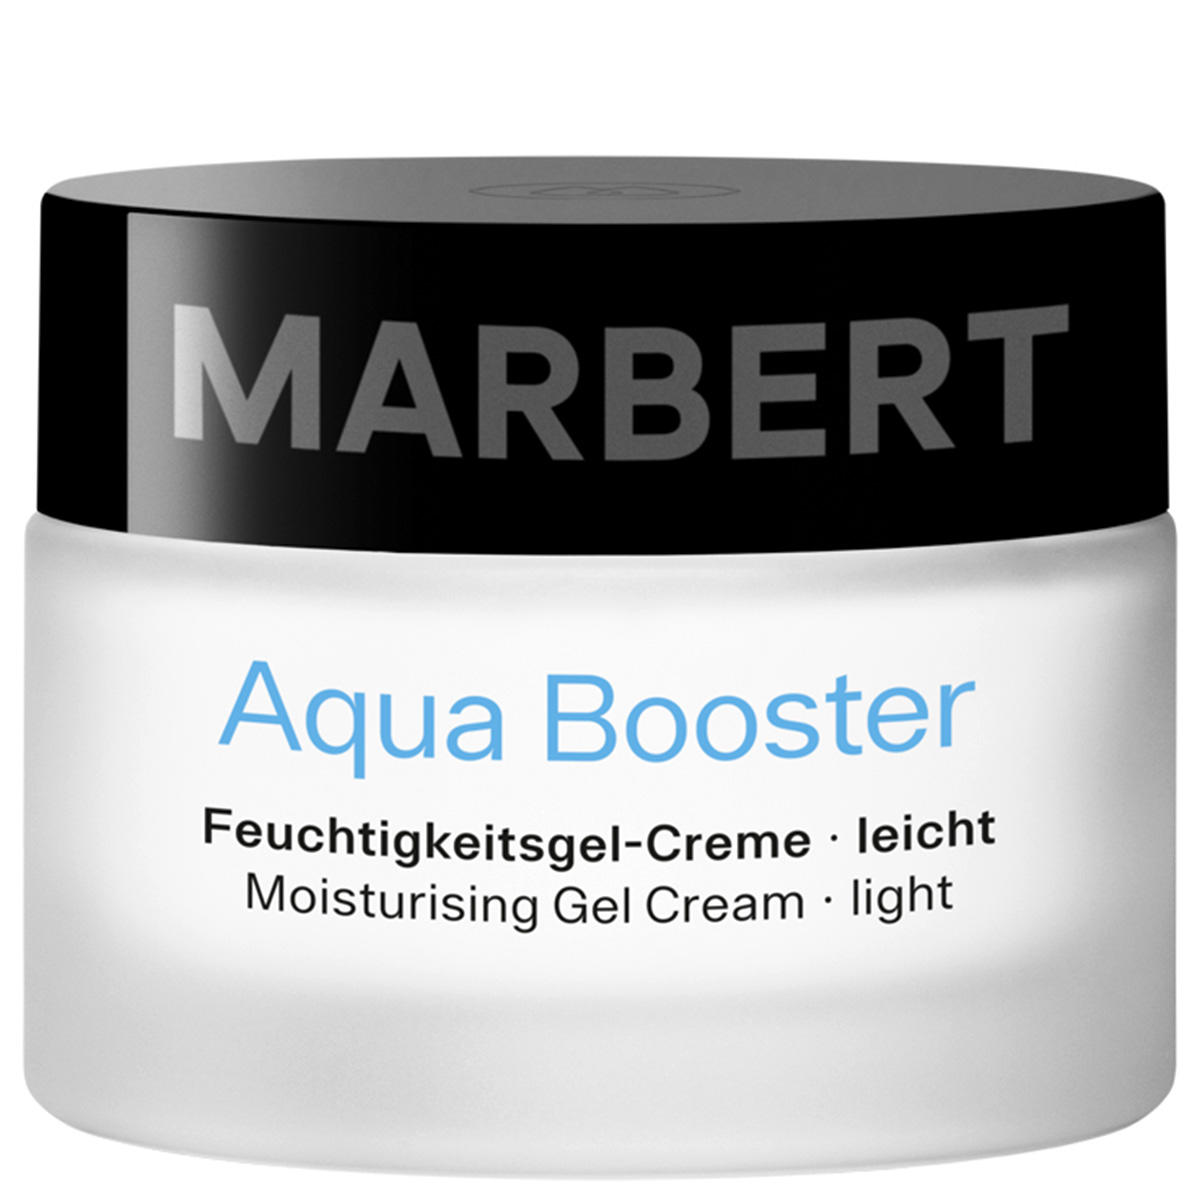 Marbert Aqua Booster Gel crema hidratante light 50 ml - 1